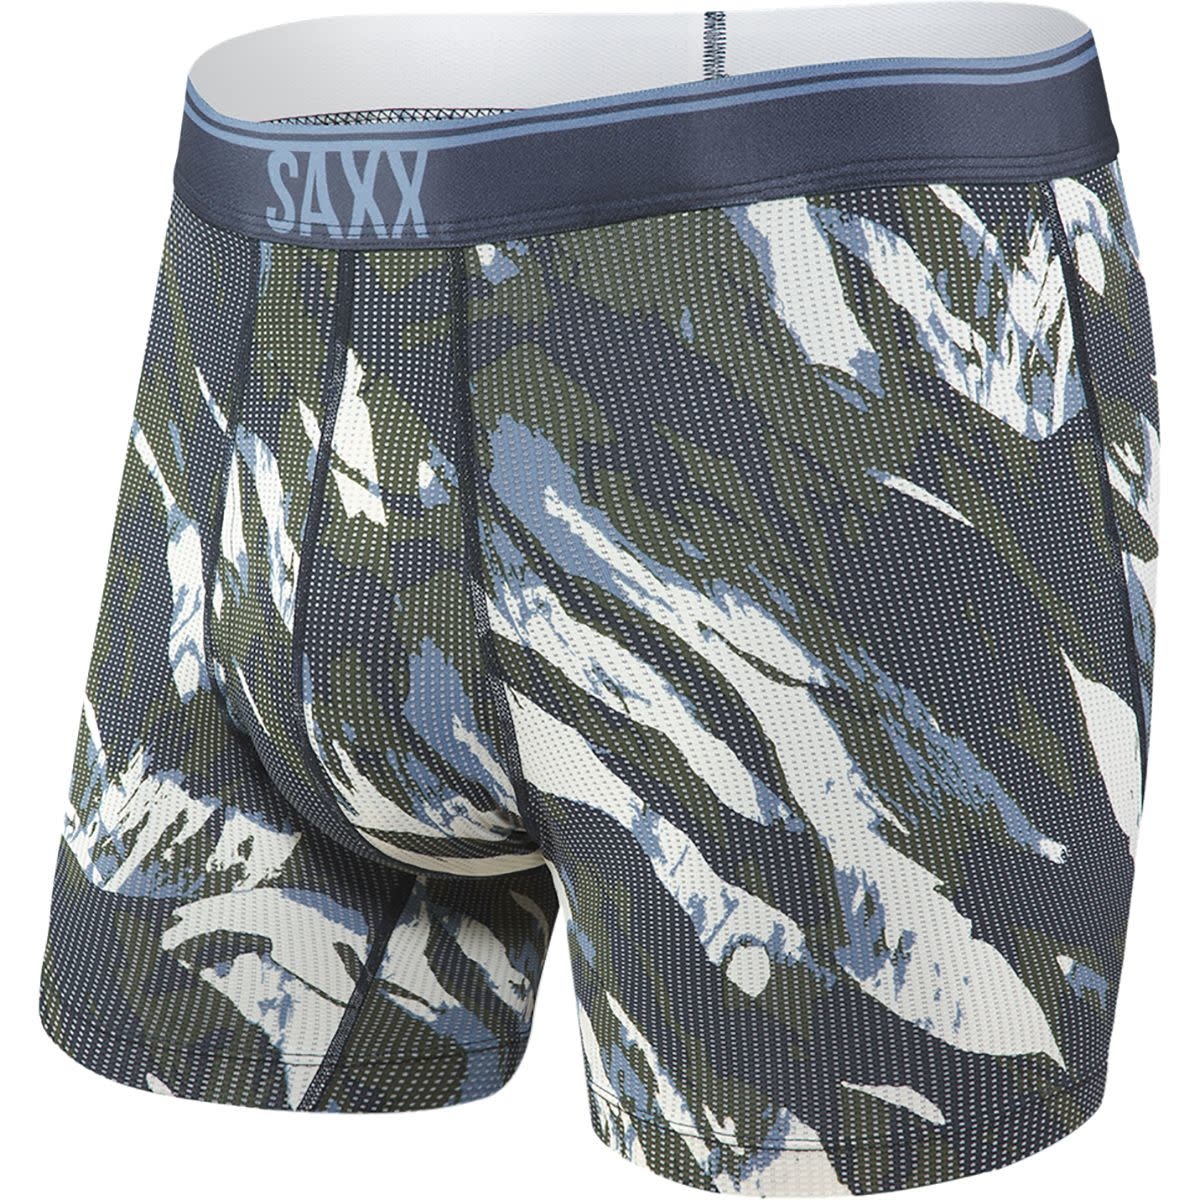 Saxx Quest Boxer Brief - Delta Outdoors